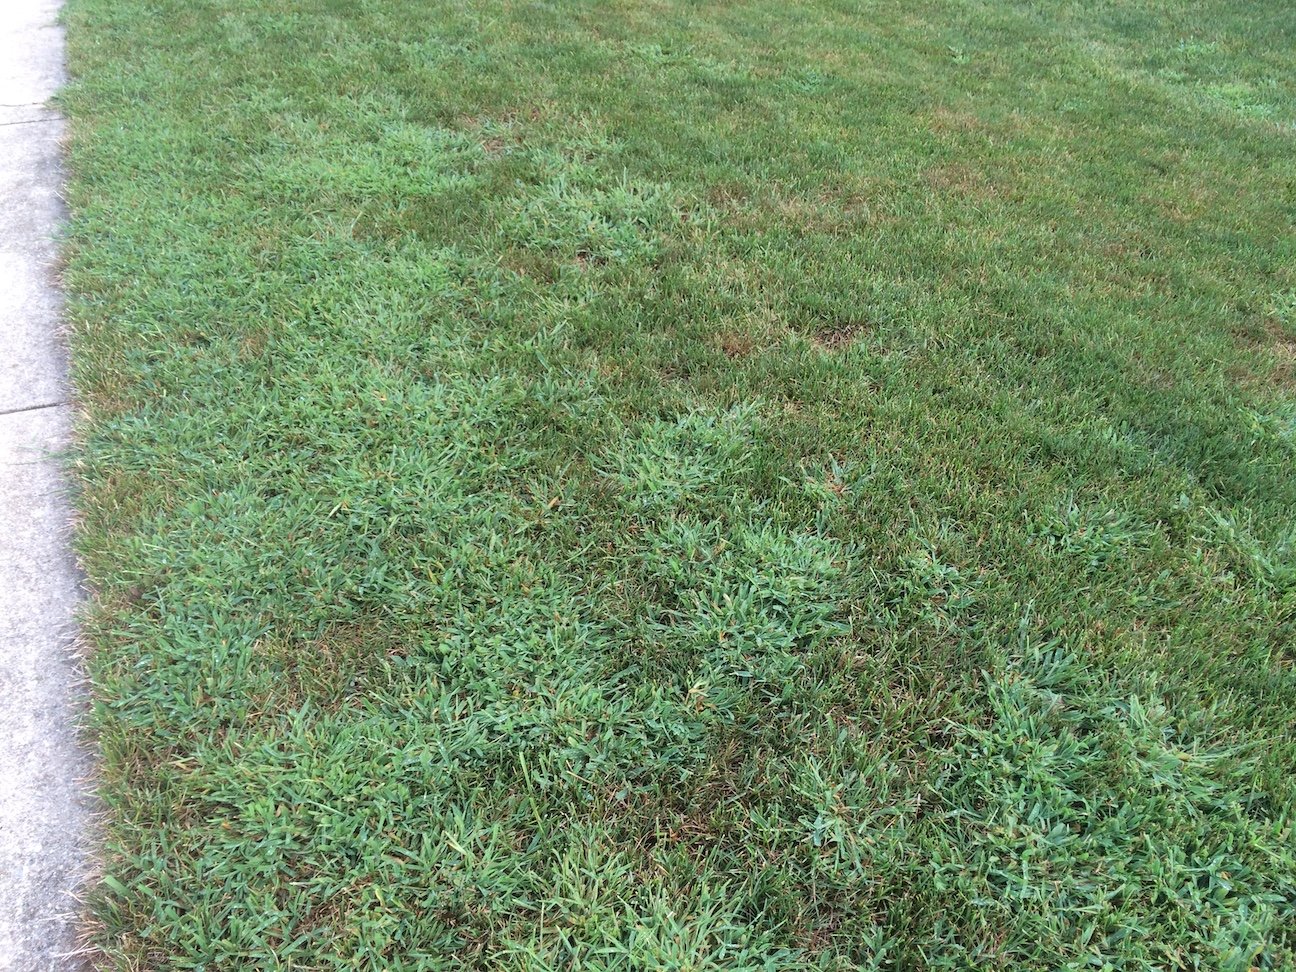 Crabgrass invading lawn